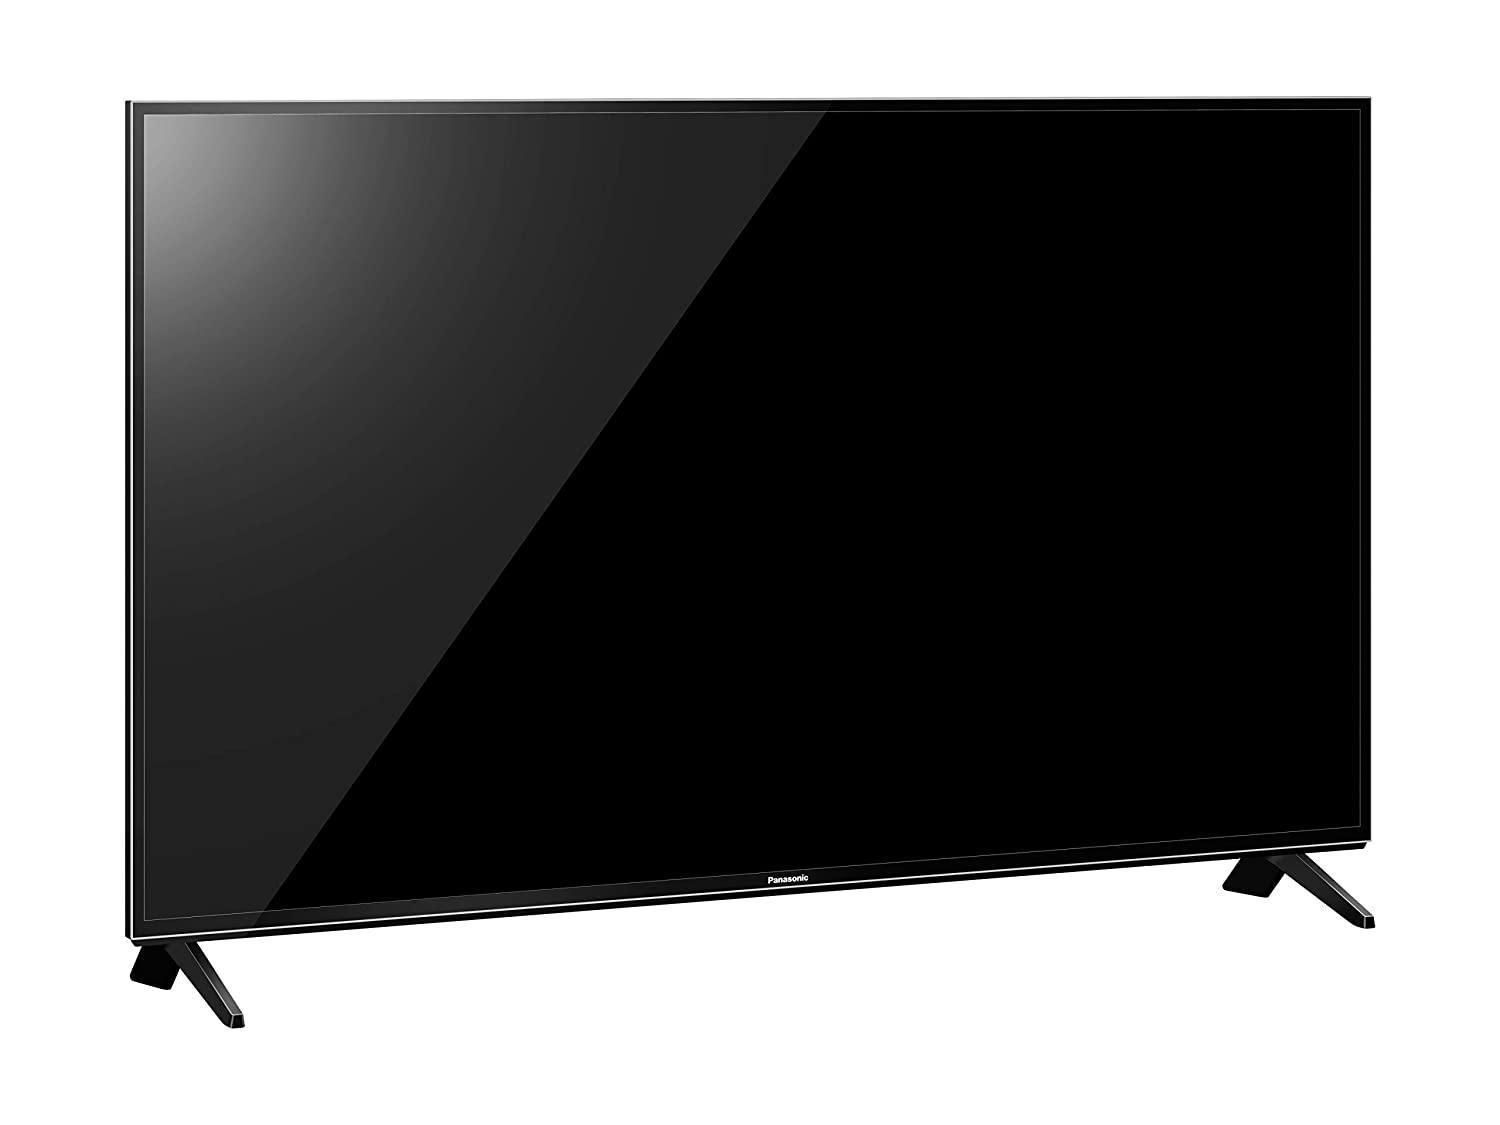 Panasonic 139 cm (55 inches) G750 Series 4K Ultra HD LED TV TH-55GX750D (Black) - Mahajan Electronics Online